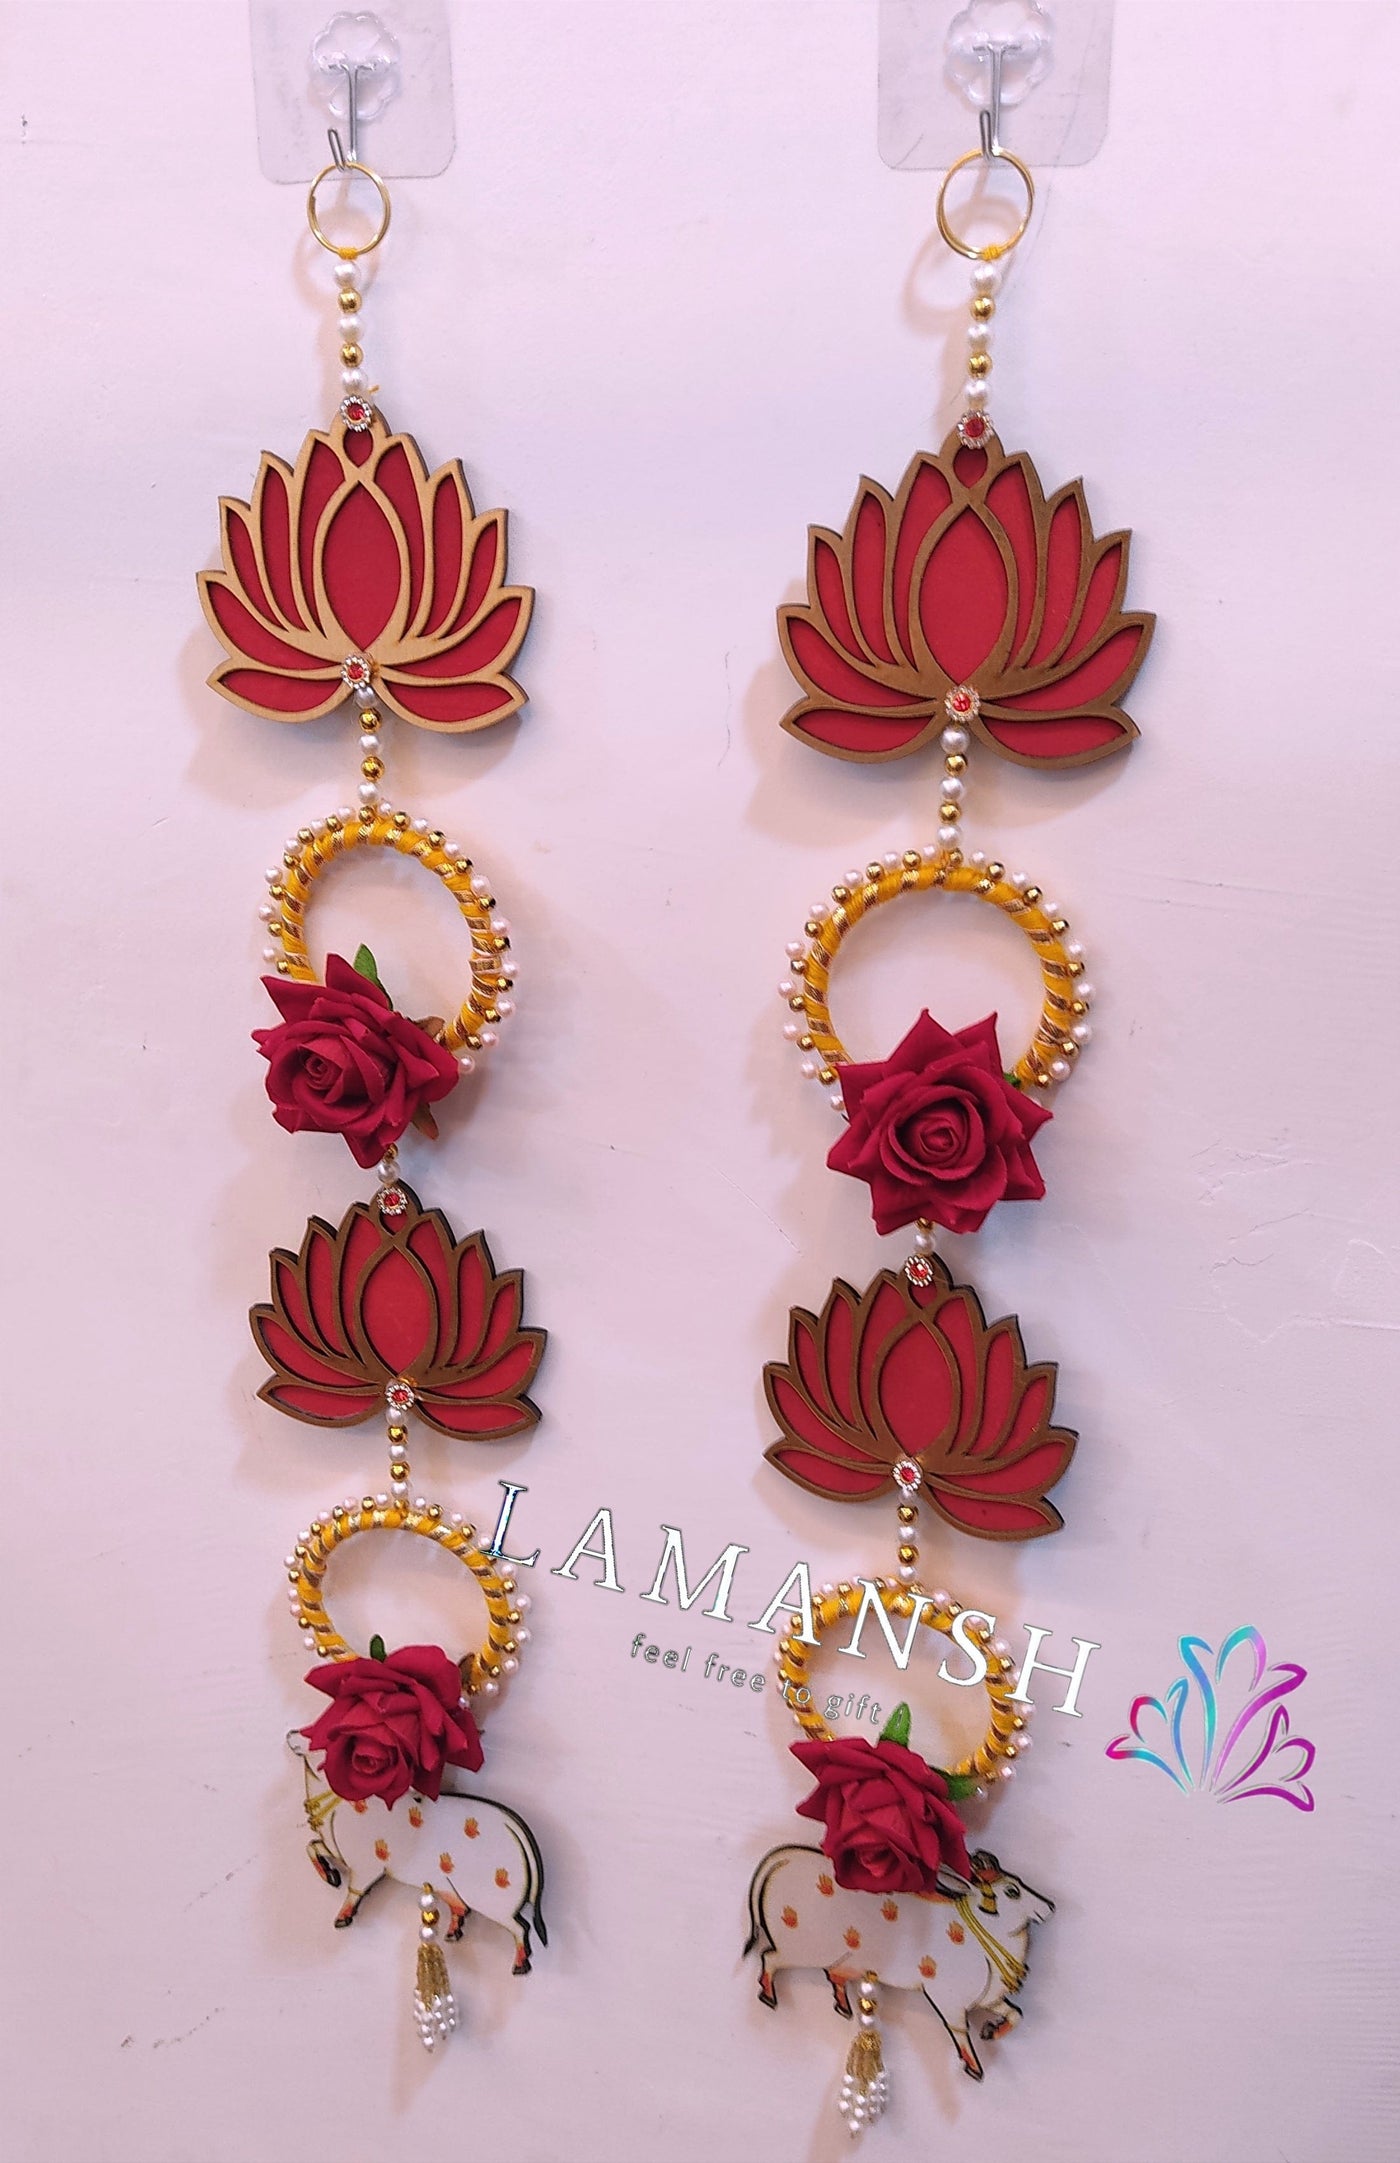 120 Rs per hanging on buying 25+ hangings lotus hanging LAMANSH 2 feet lotus X rose 🌹gota decorative hangings for diwali & navratri decor